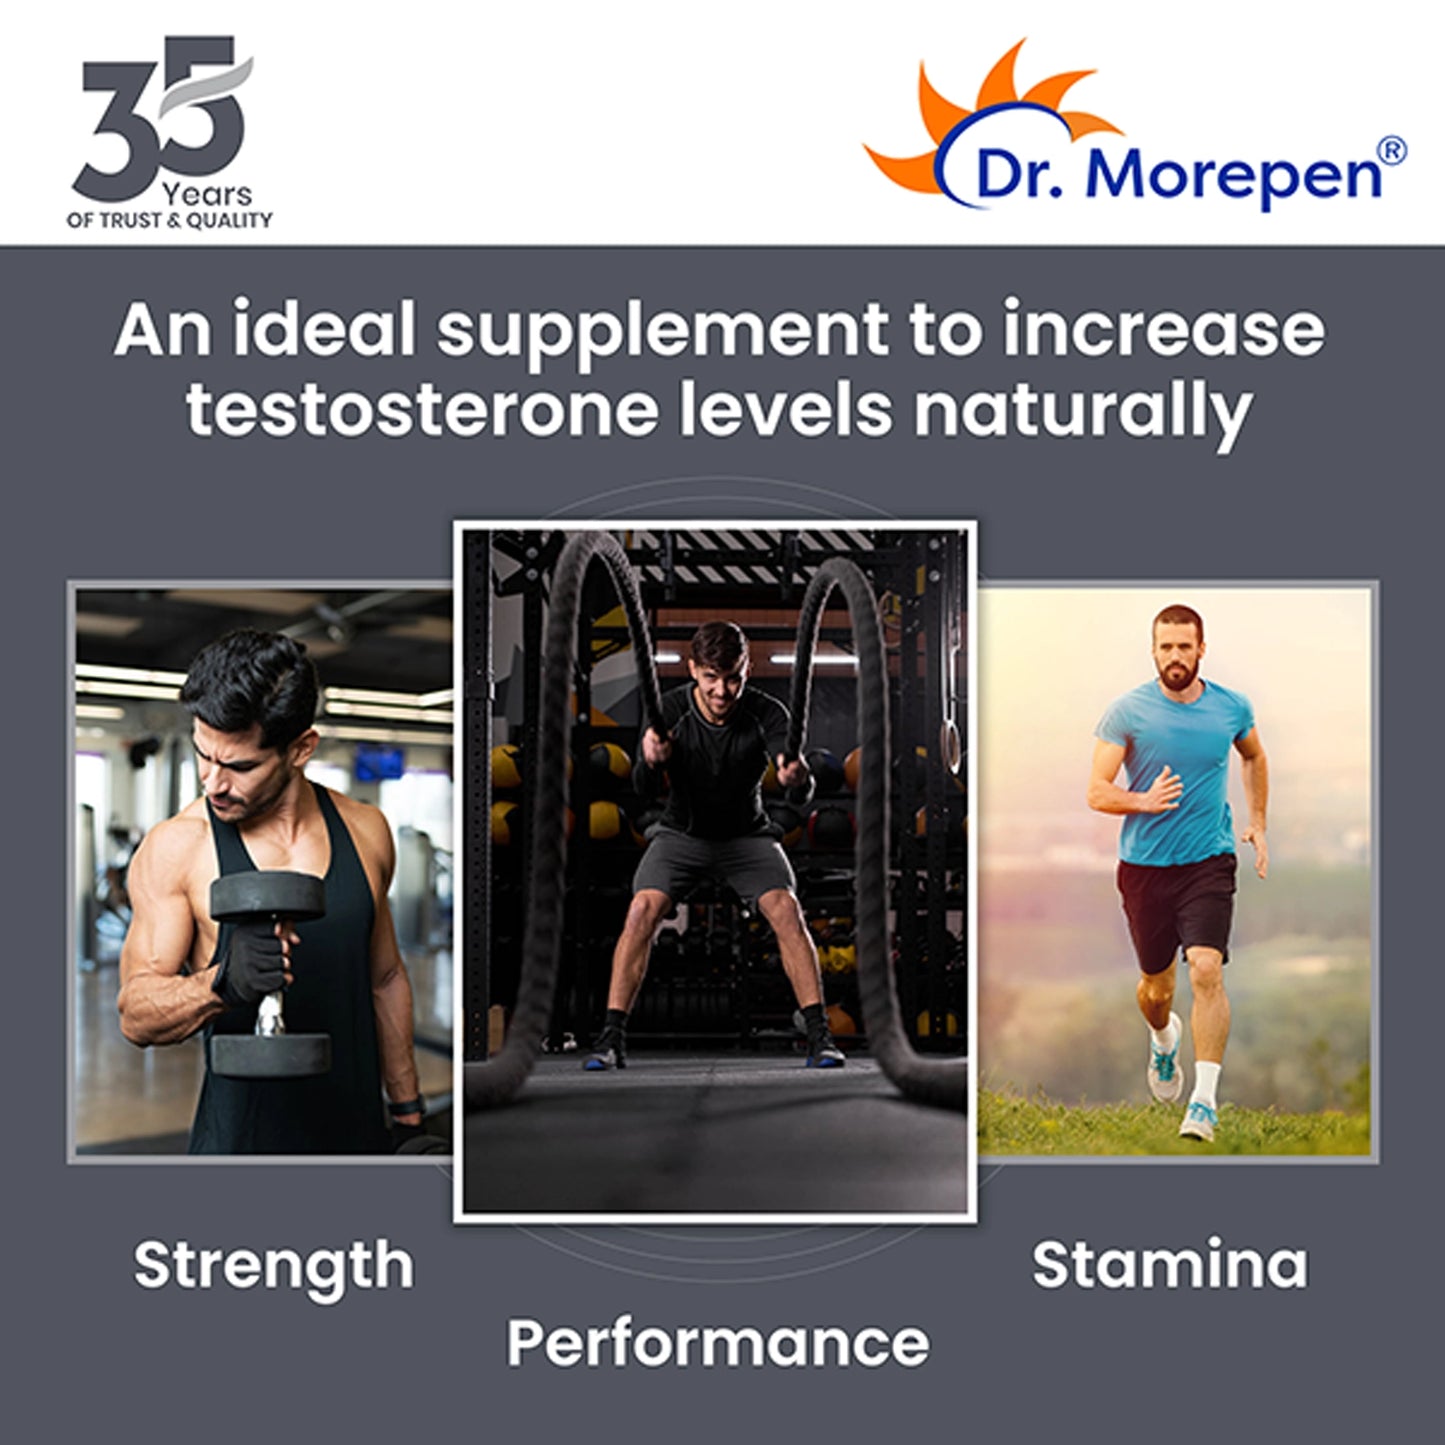 Testo Boost & Multivitamin Men -With Omega 3 & Herbs /Energy & Immunity Booste